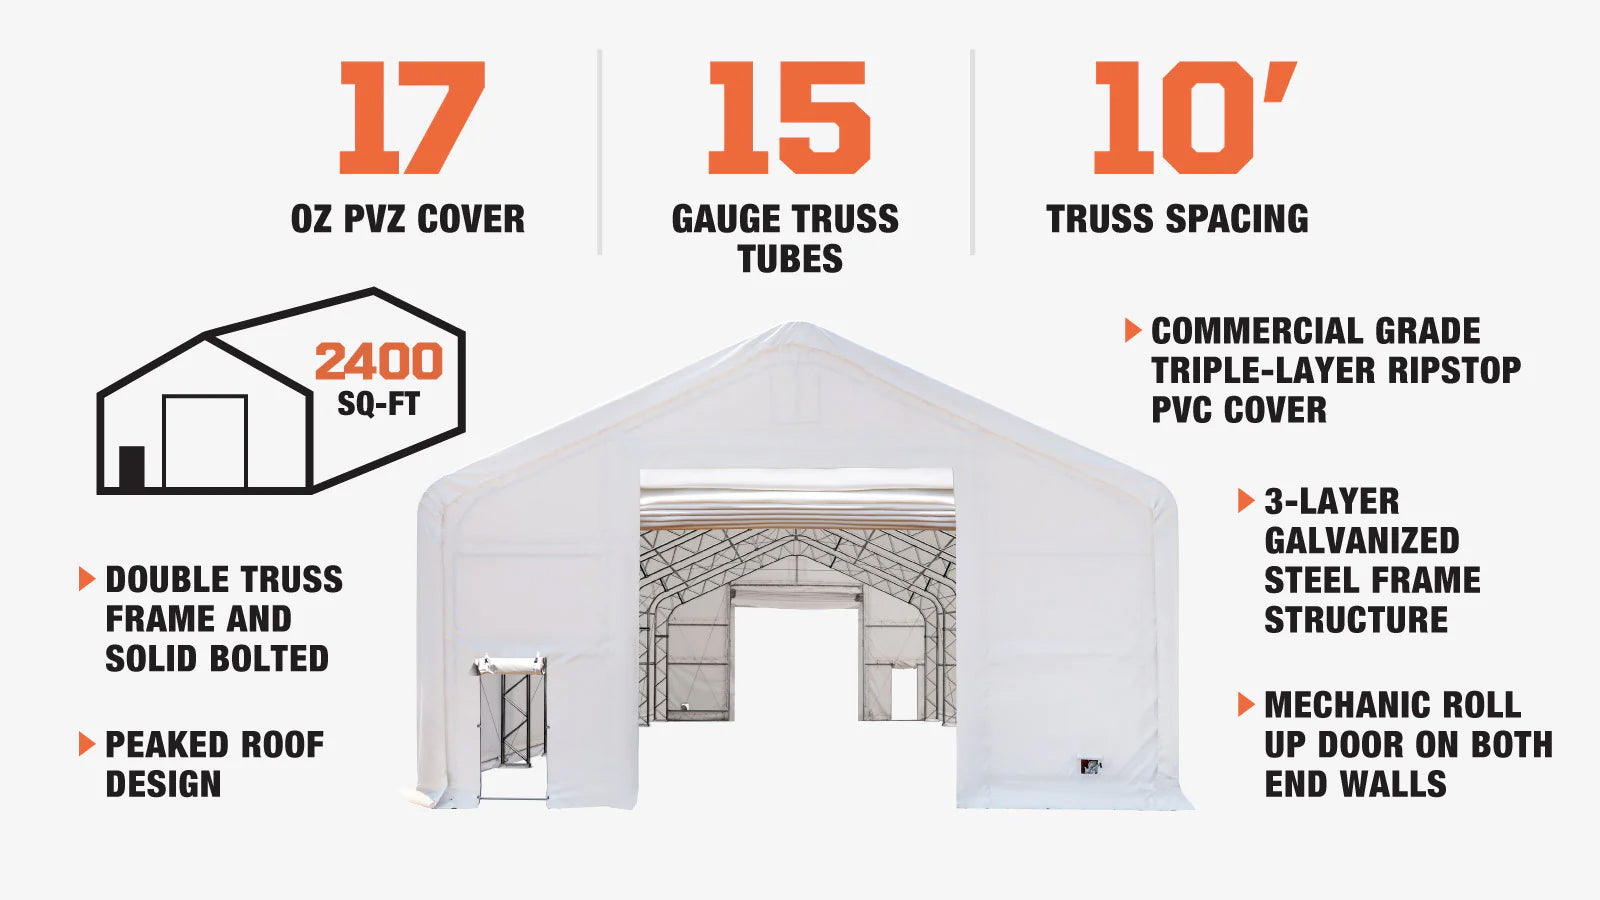 TMG Industrial 30' x 80' Dual Truss Storage Shelter with Heavy Duty 17 oz PVC Cover & Drive Through Doors, TMG-DT3081-description-image